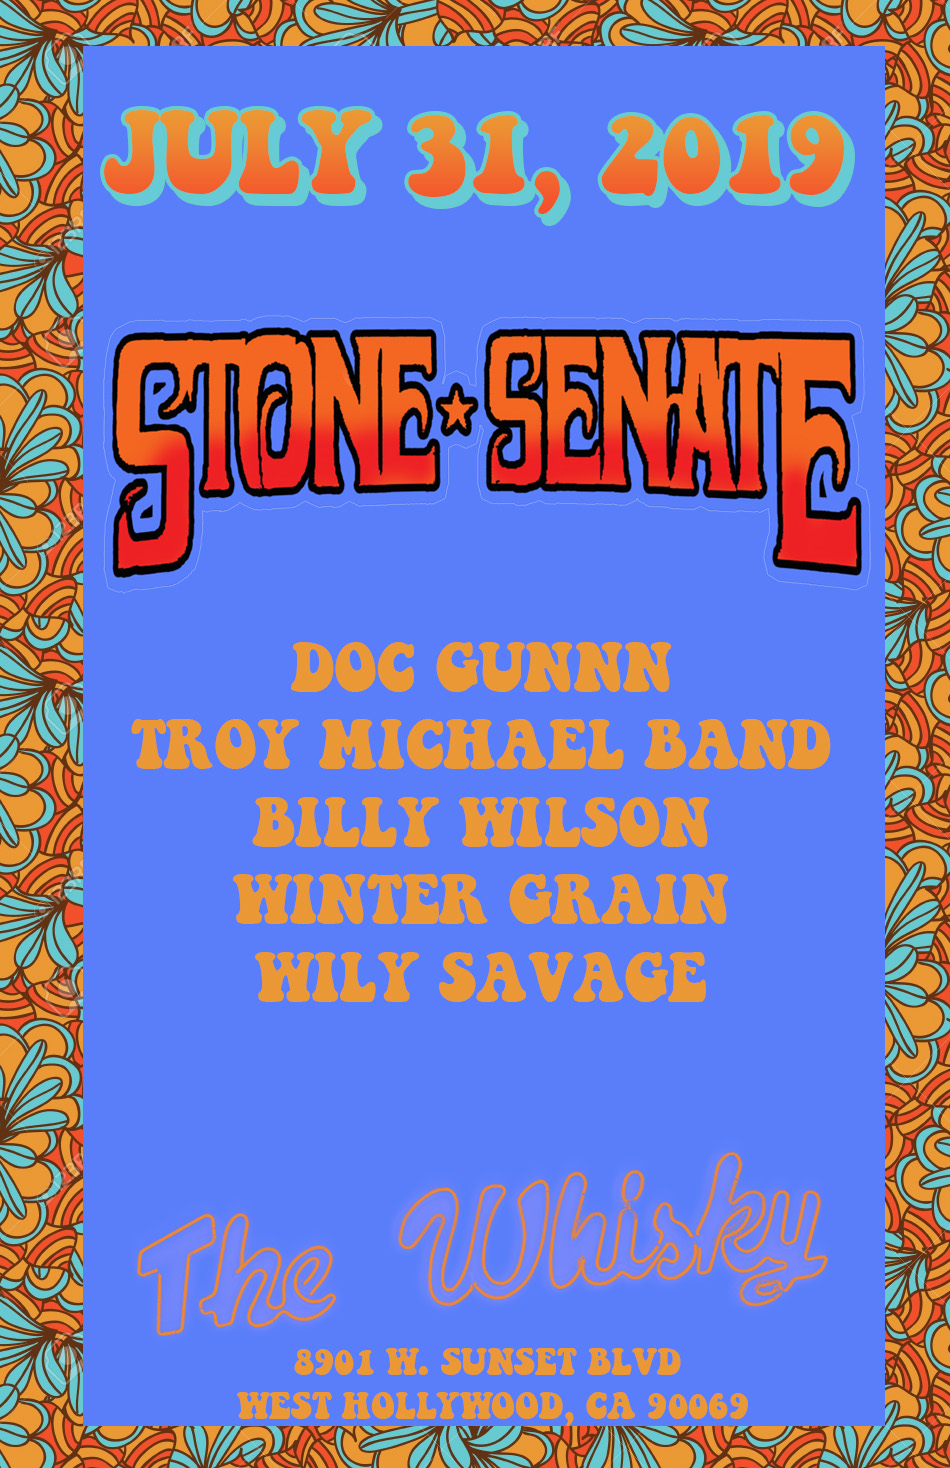 Stone Senate, Doc Gunnn, Wily Saváge, Industry Standards, Billy Wilson, Winter Grain